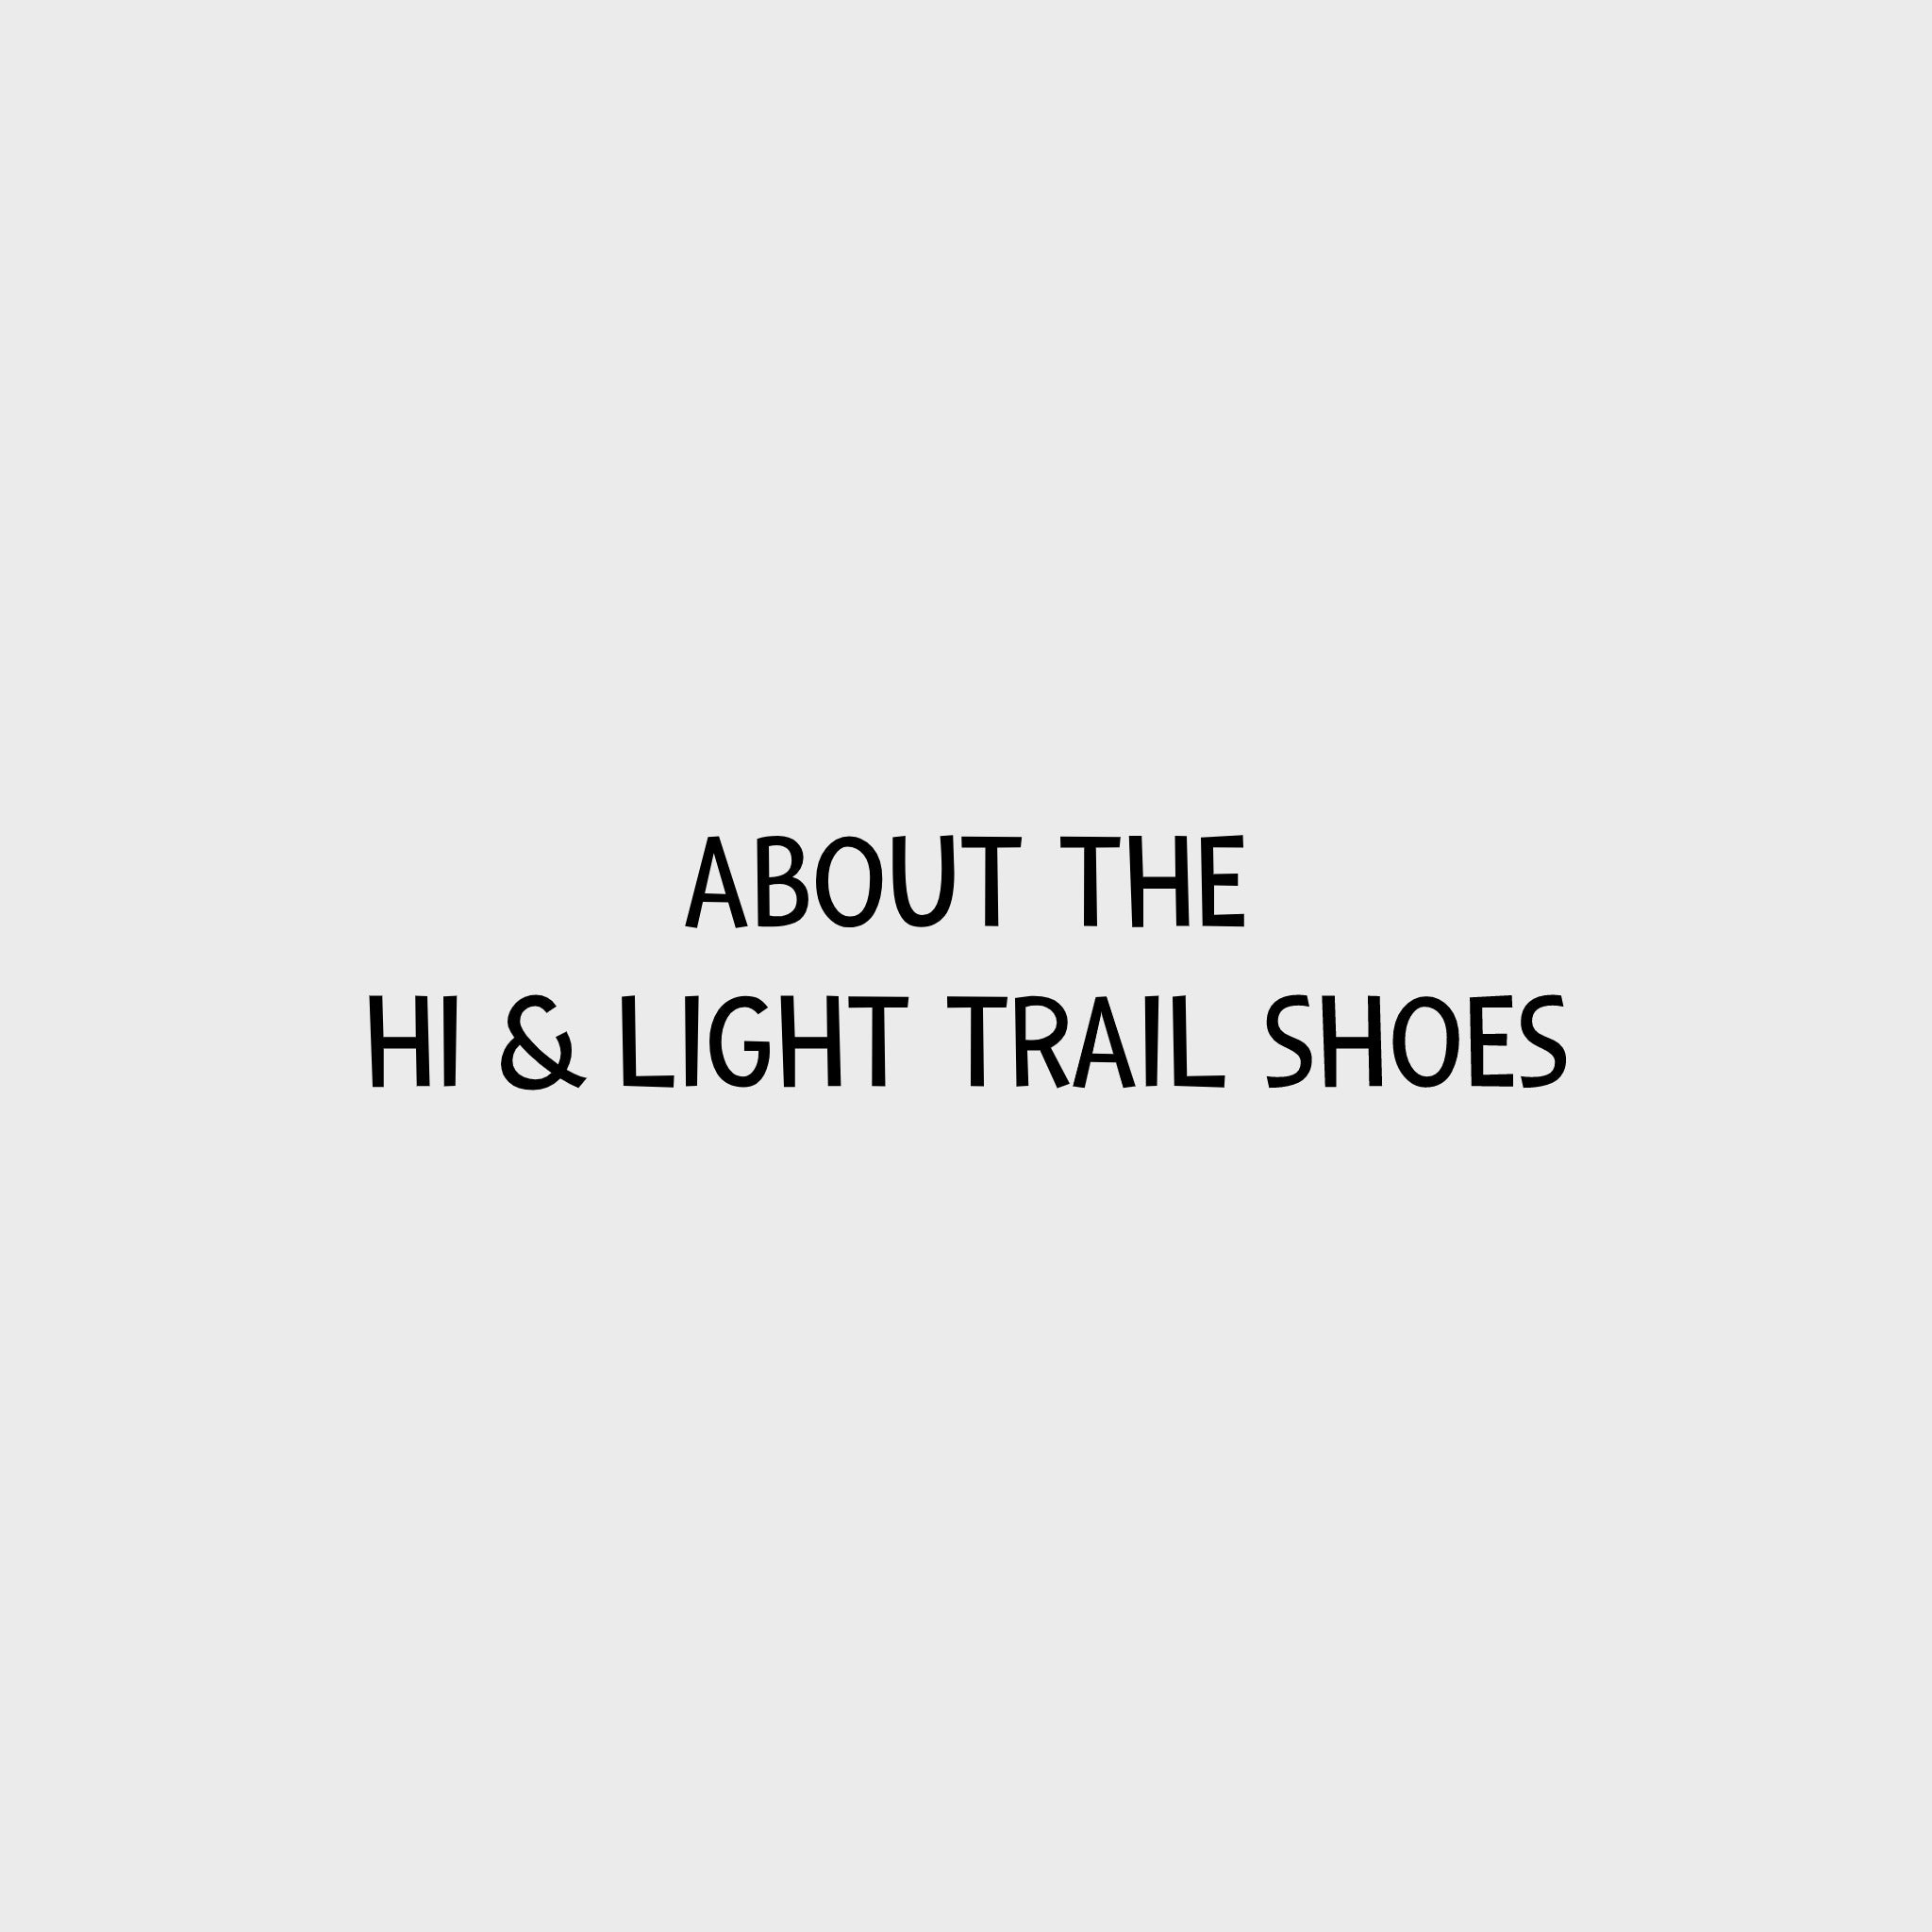 Video - Ruffwear Hi & Light Trail Shoes